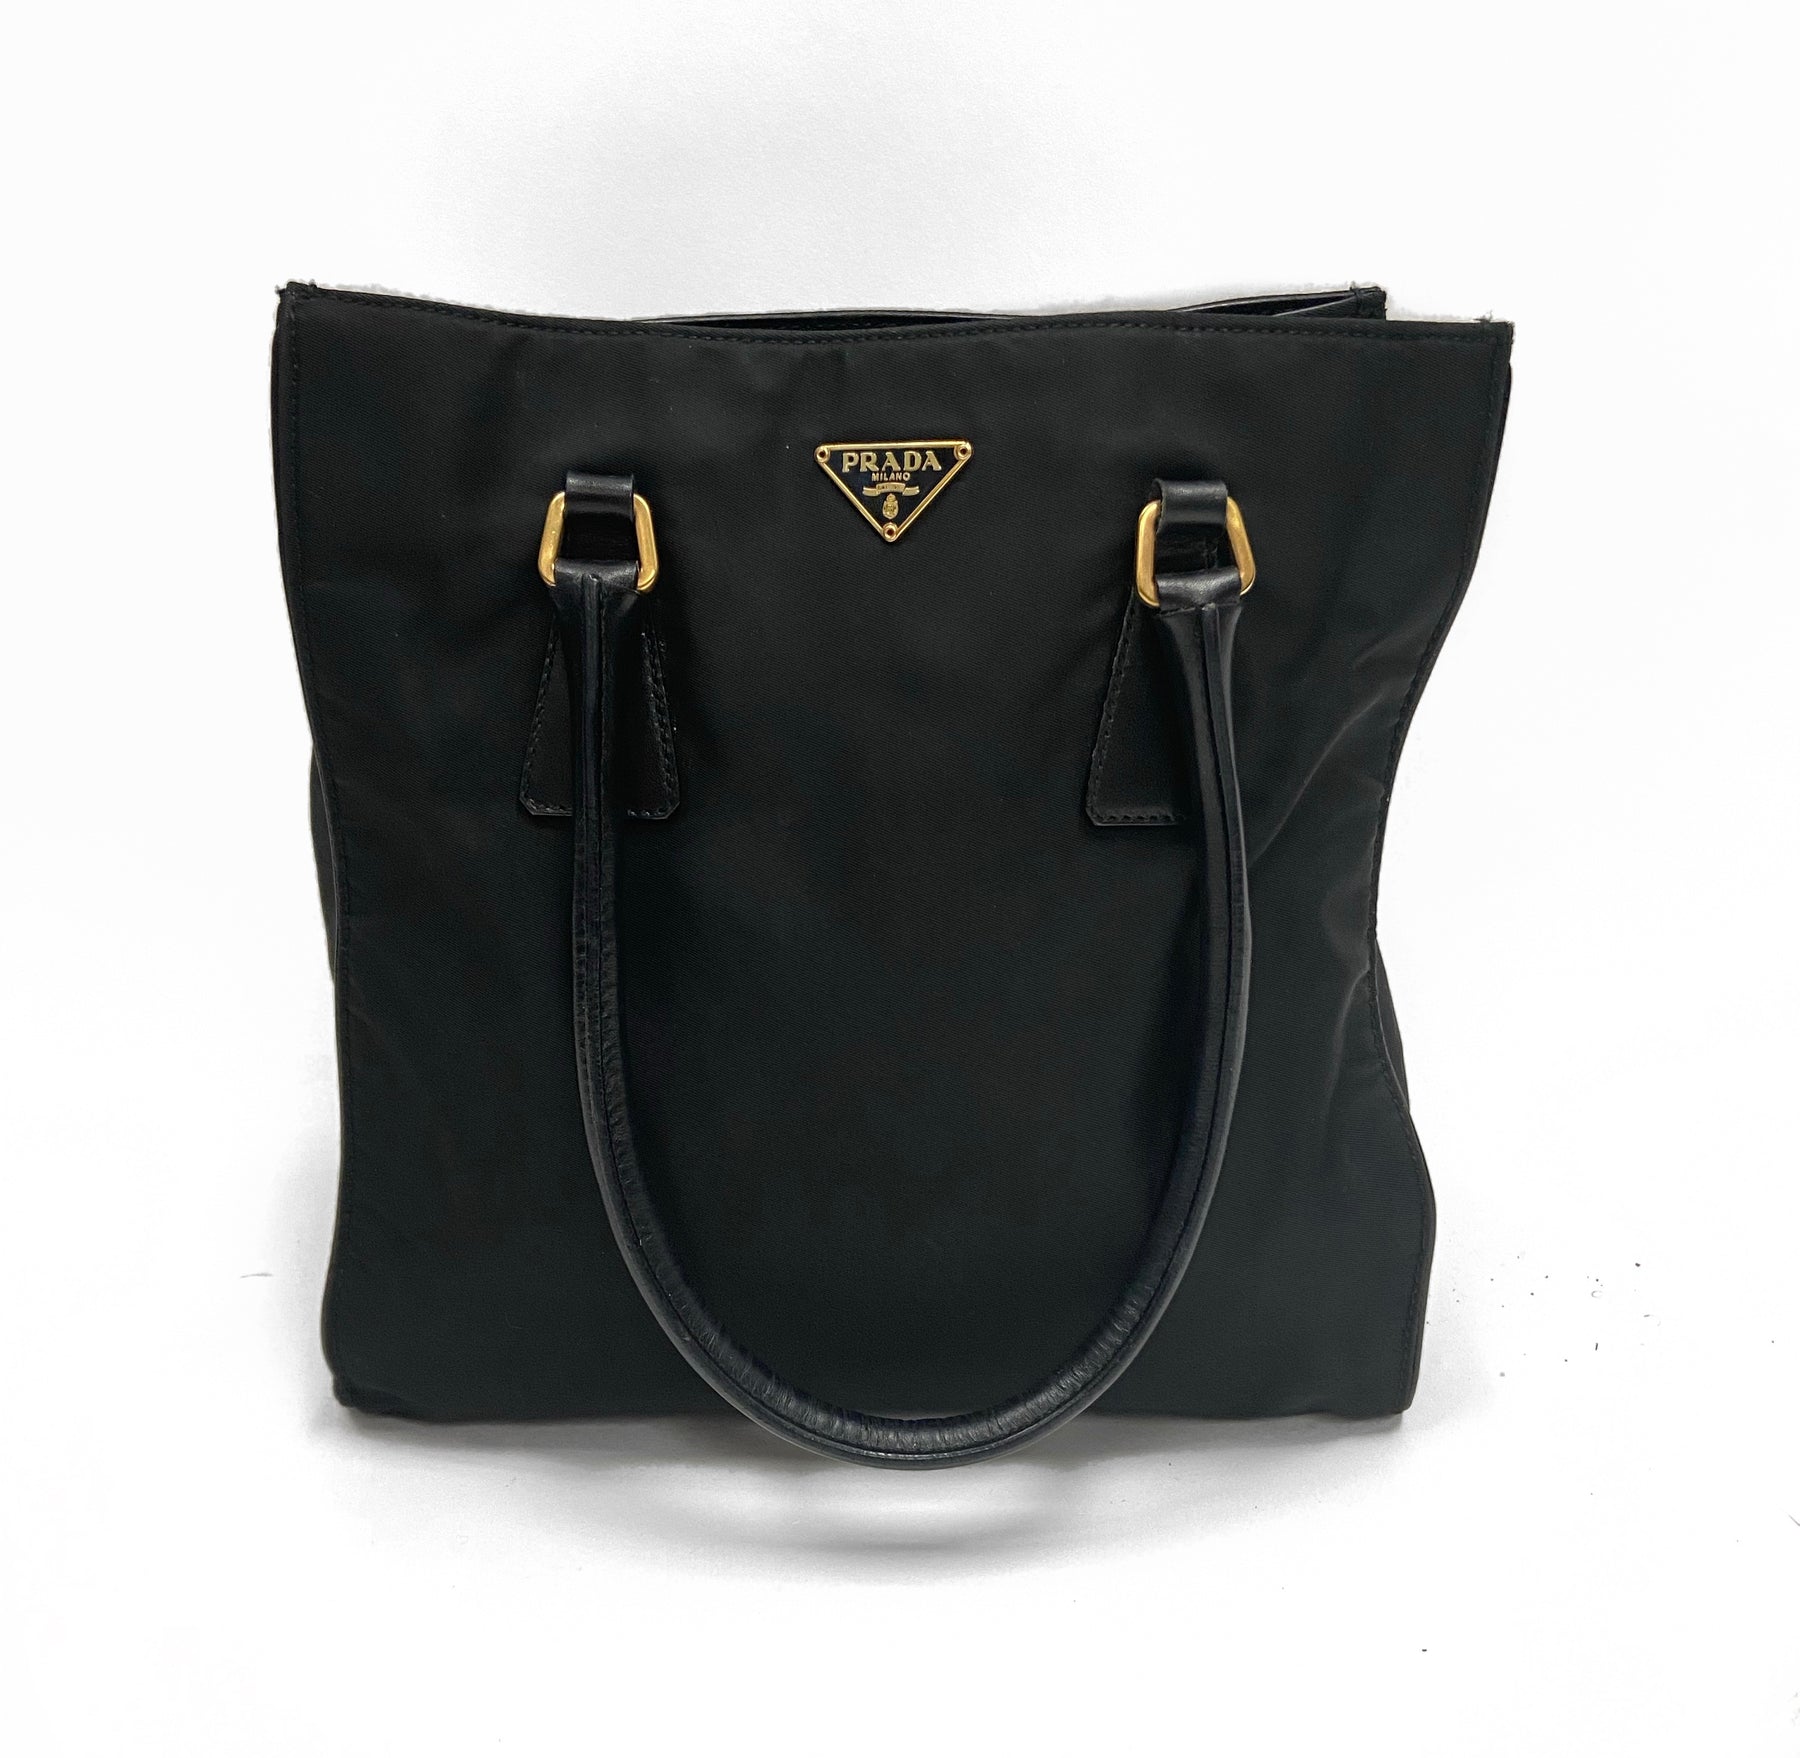 PRADA Nylon Leather Tote Bag